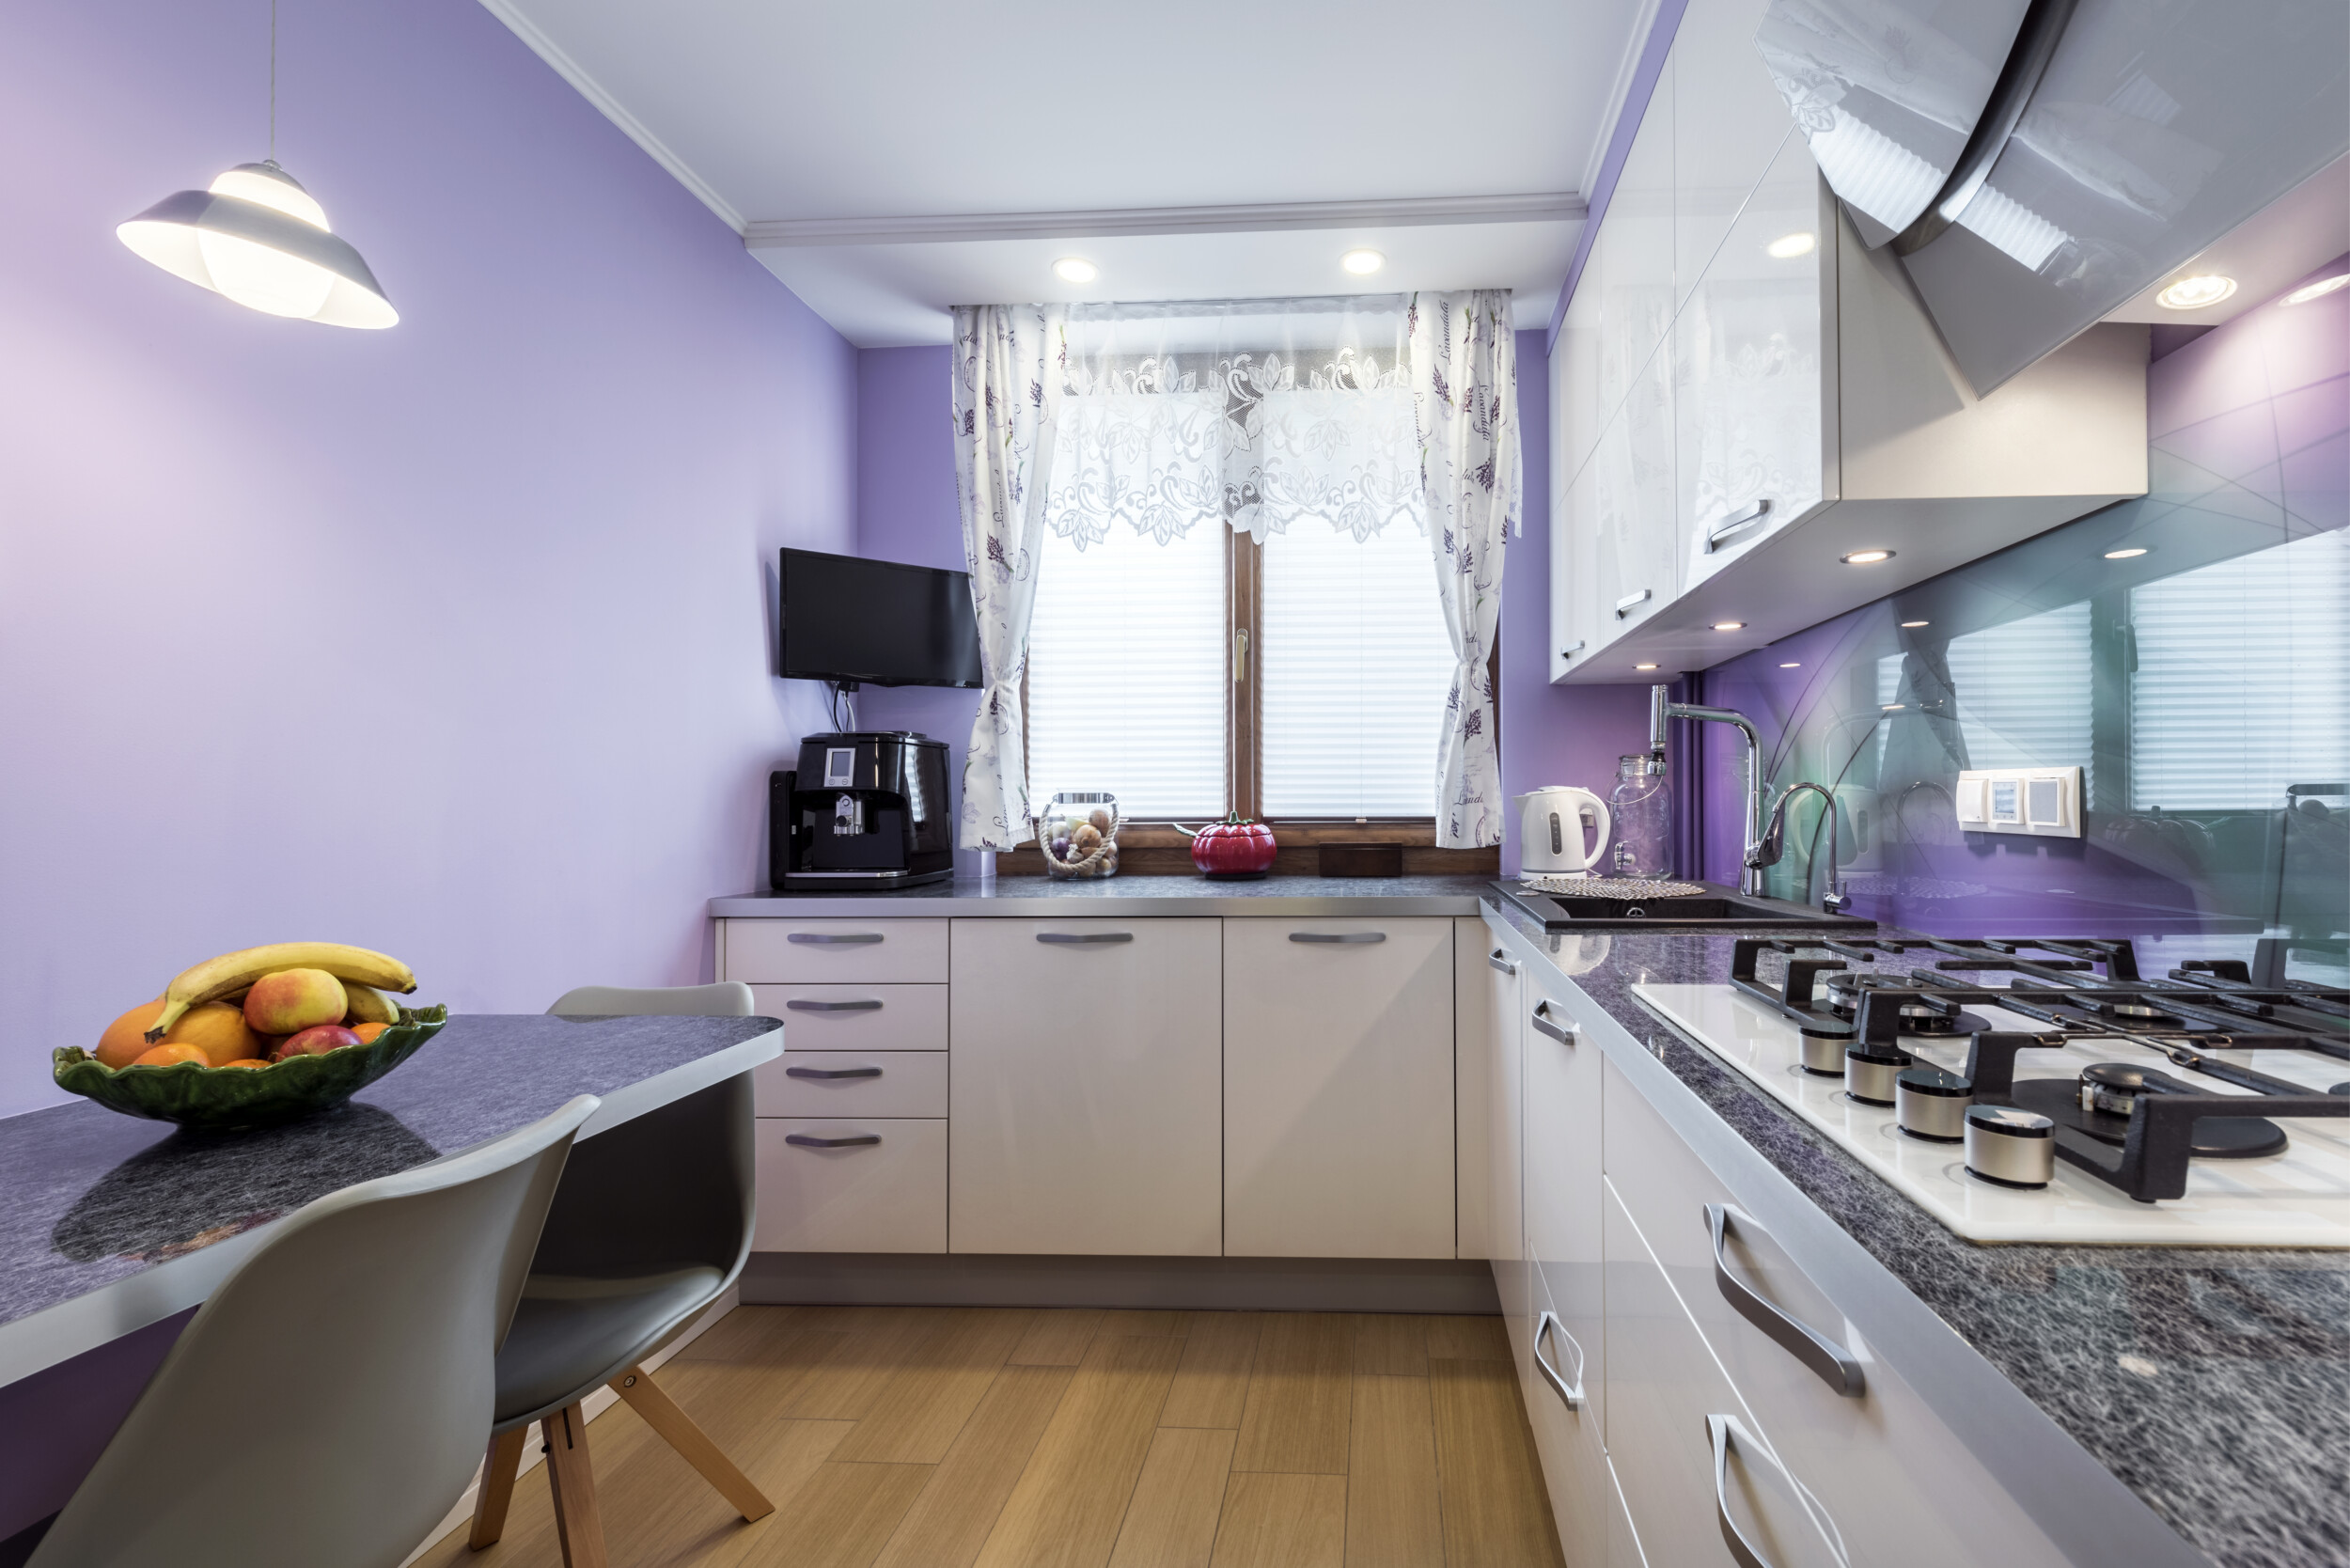 https://www.decoraid.com/wp-content/uploads/2022/04/small-design-kitchen-viotet-white-renovation-2500x1668.jpg